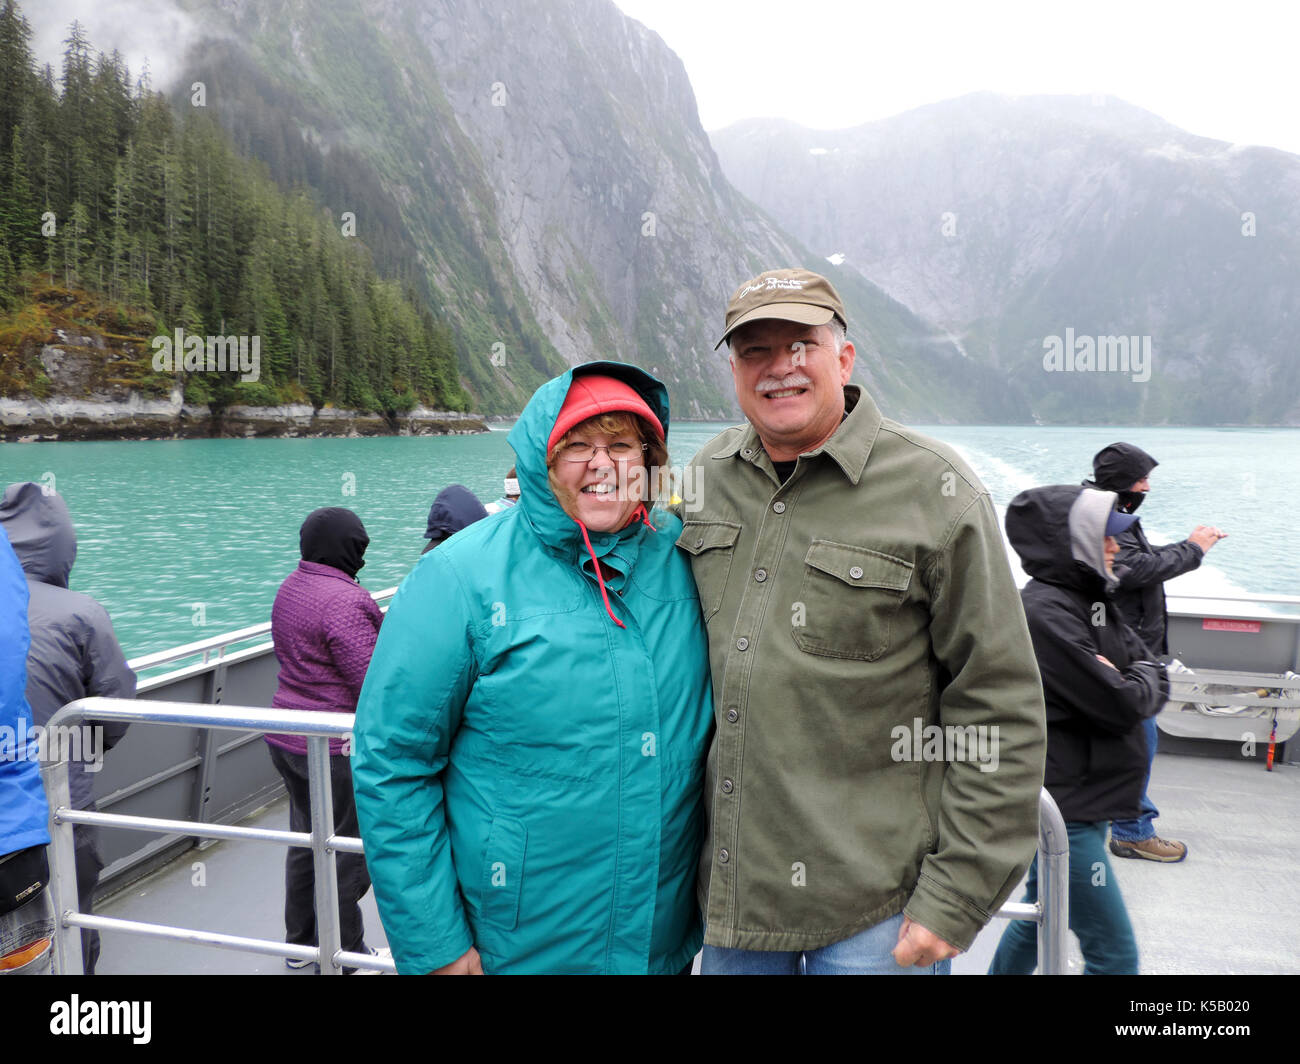 COUPLE POSING FOR PHOTOGRAPH ON SHIP DECK, ALASKA Stock Photo